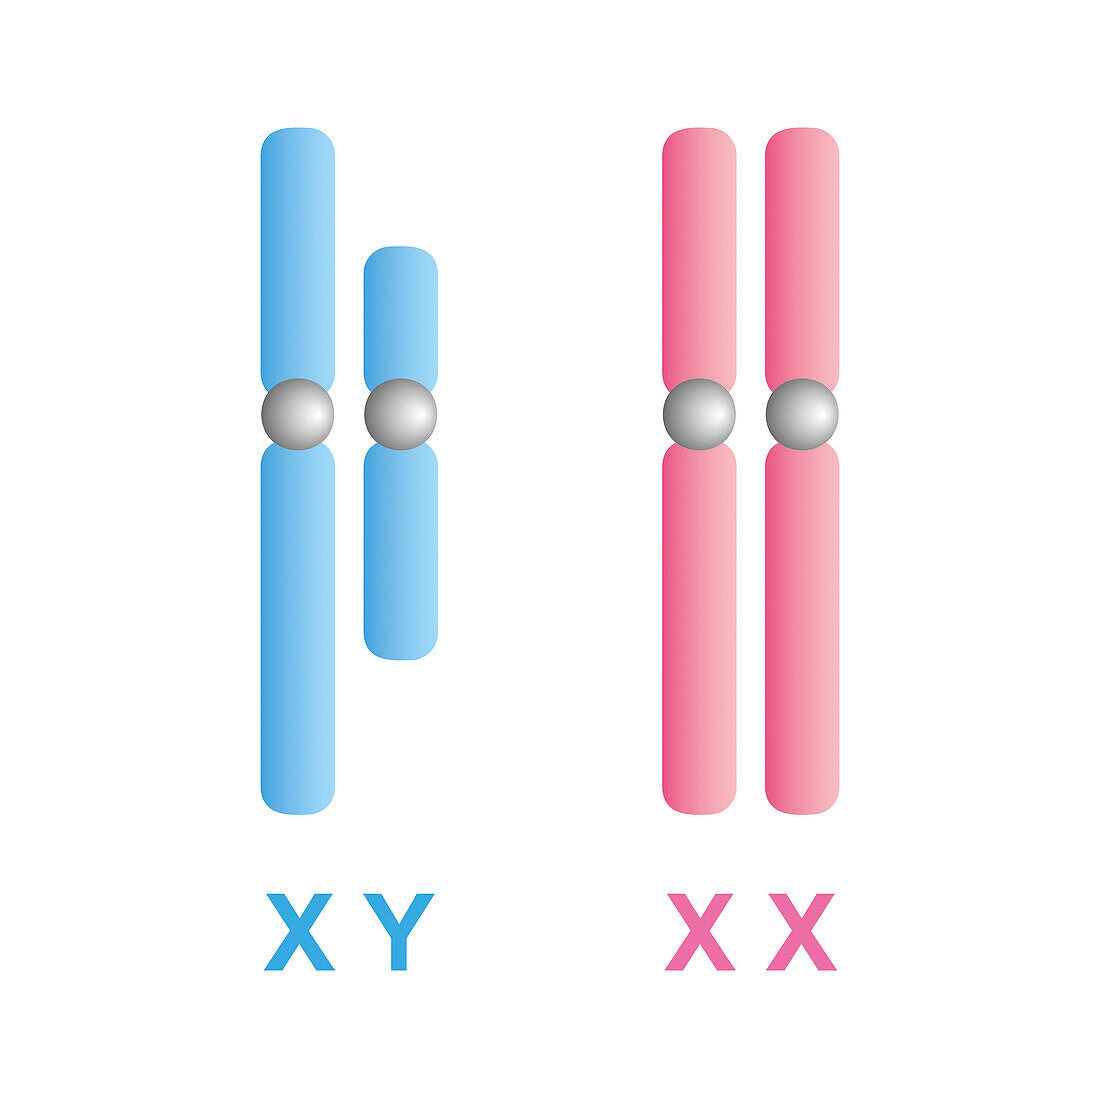 Human sex chromosomes, illustration